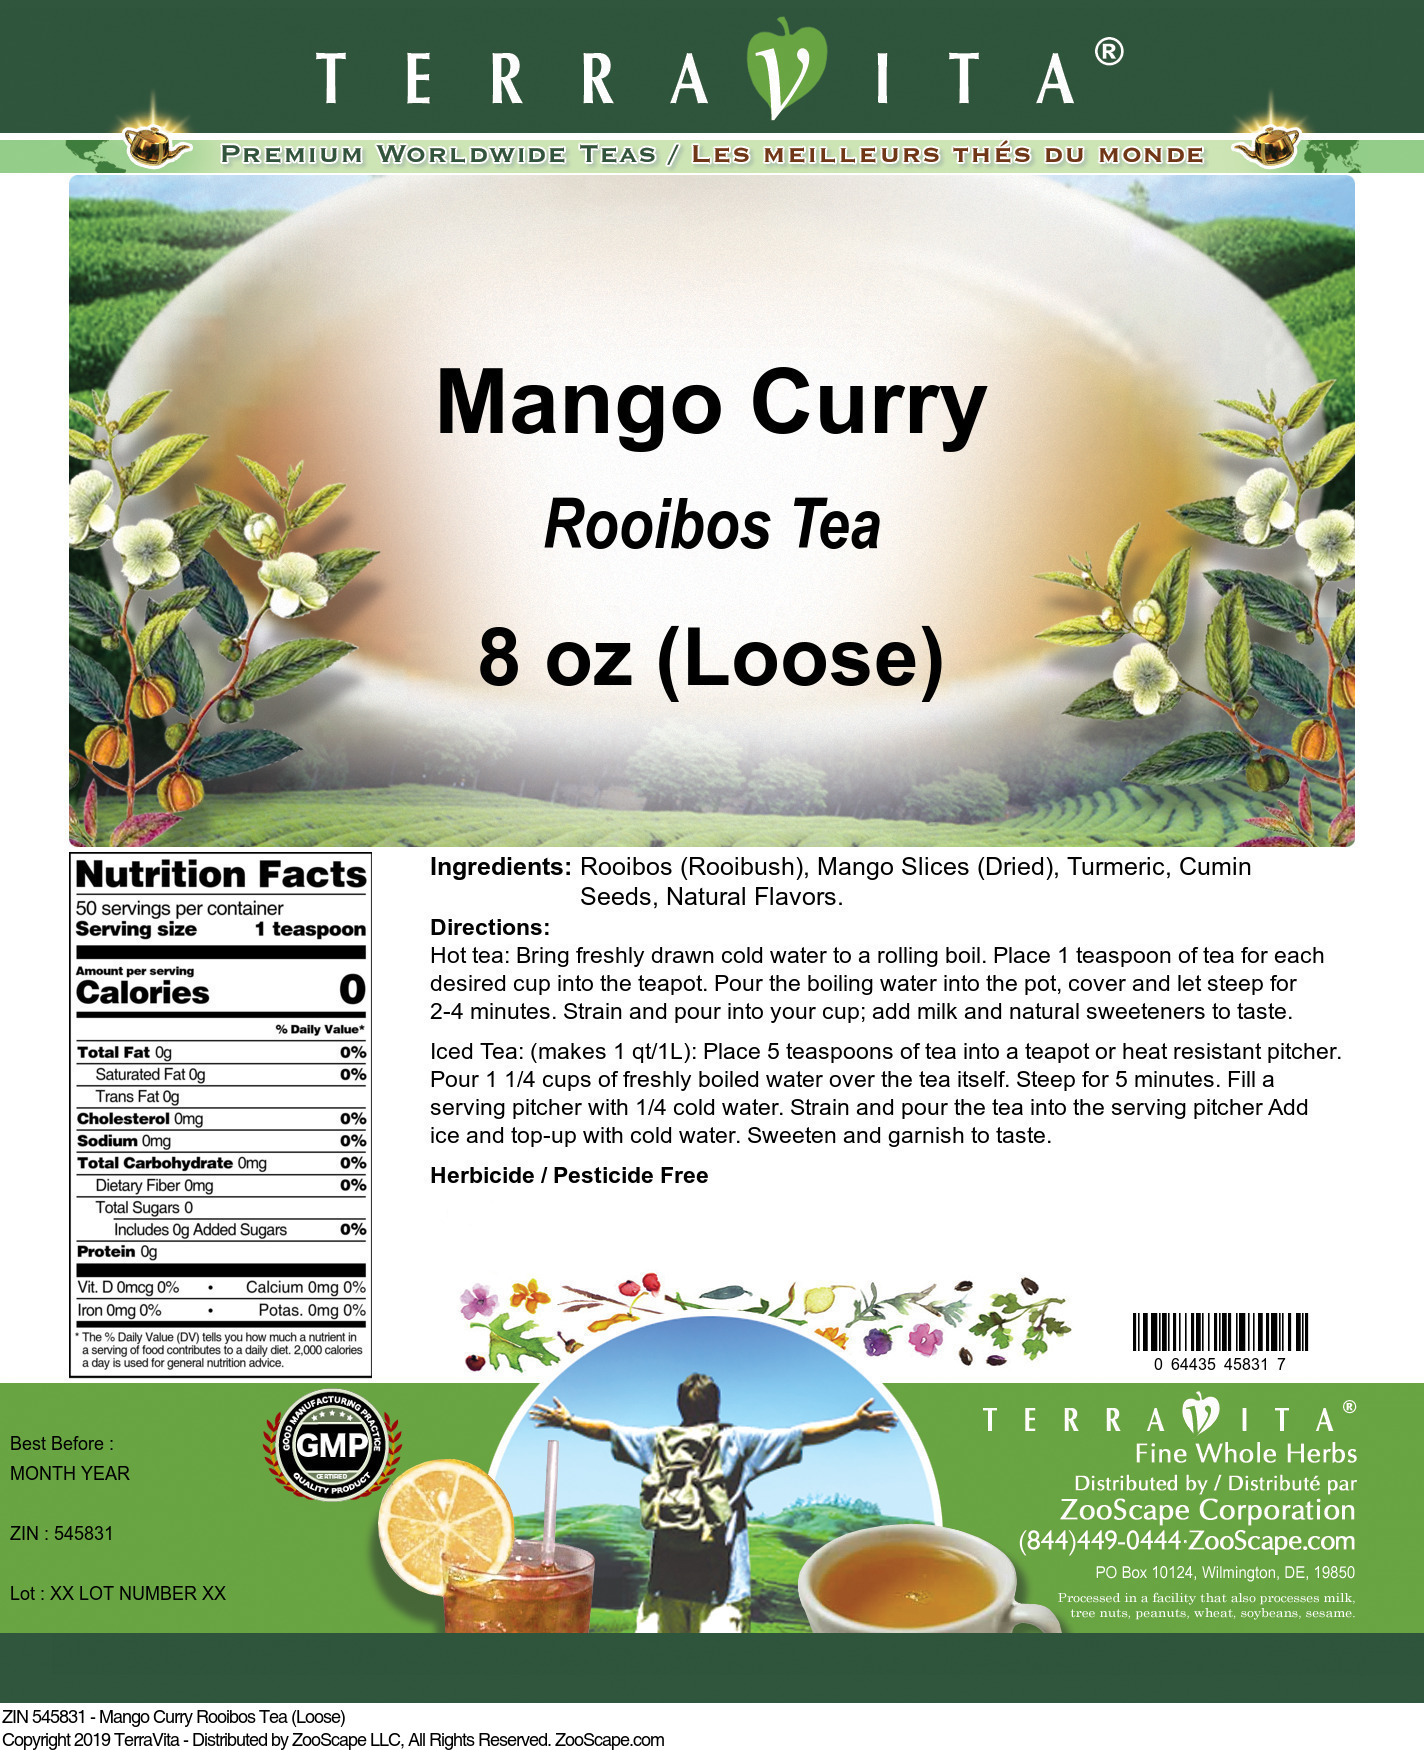 Mango Curry Rooibos Tea (Loose) - Label